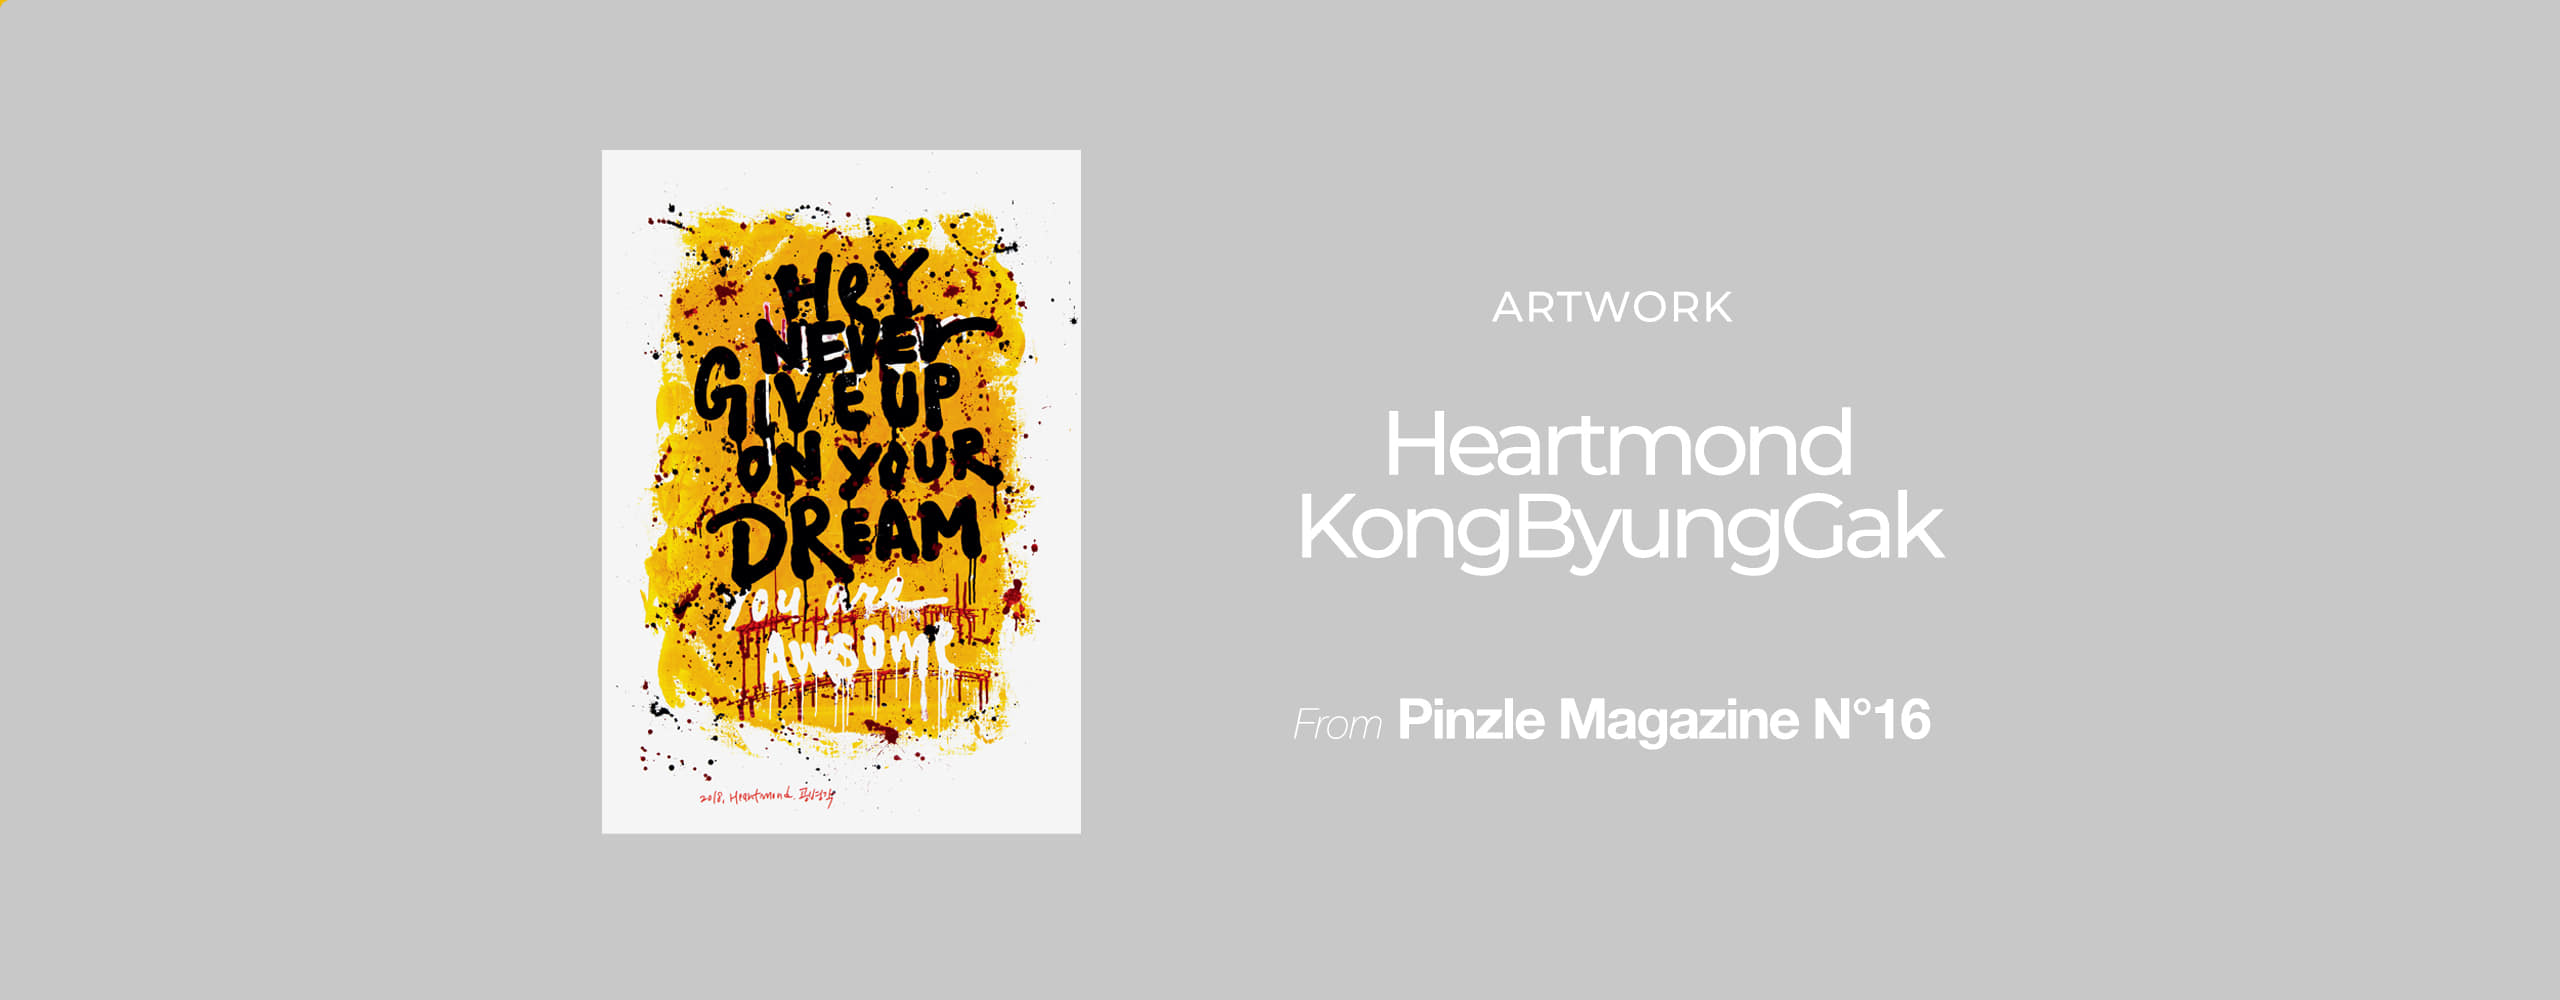 [ARTWORK] Heartmond KongByungGak